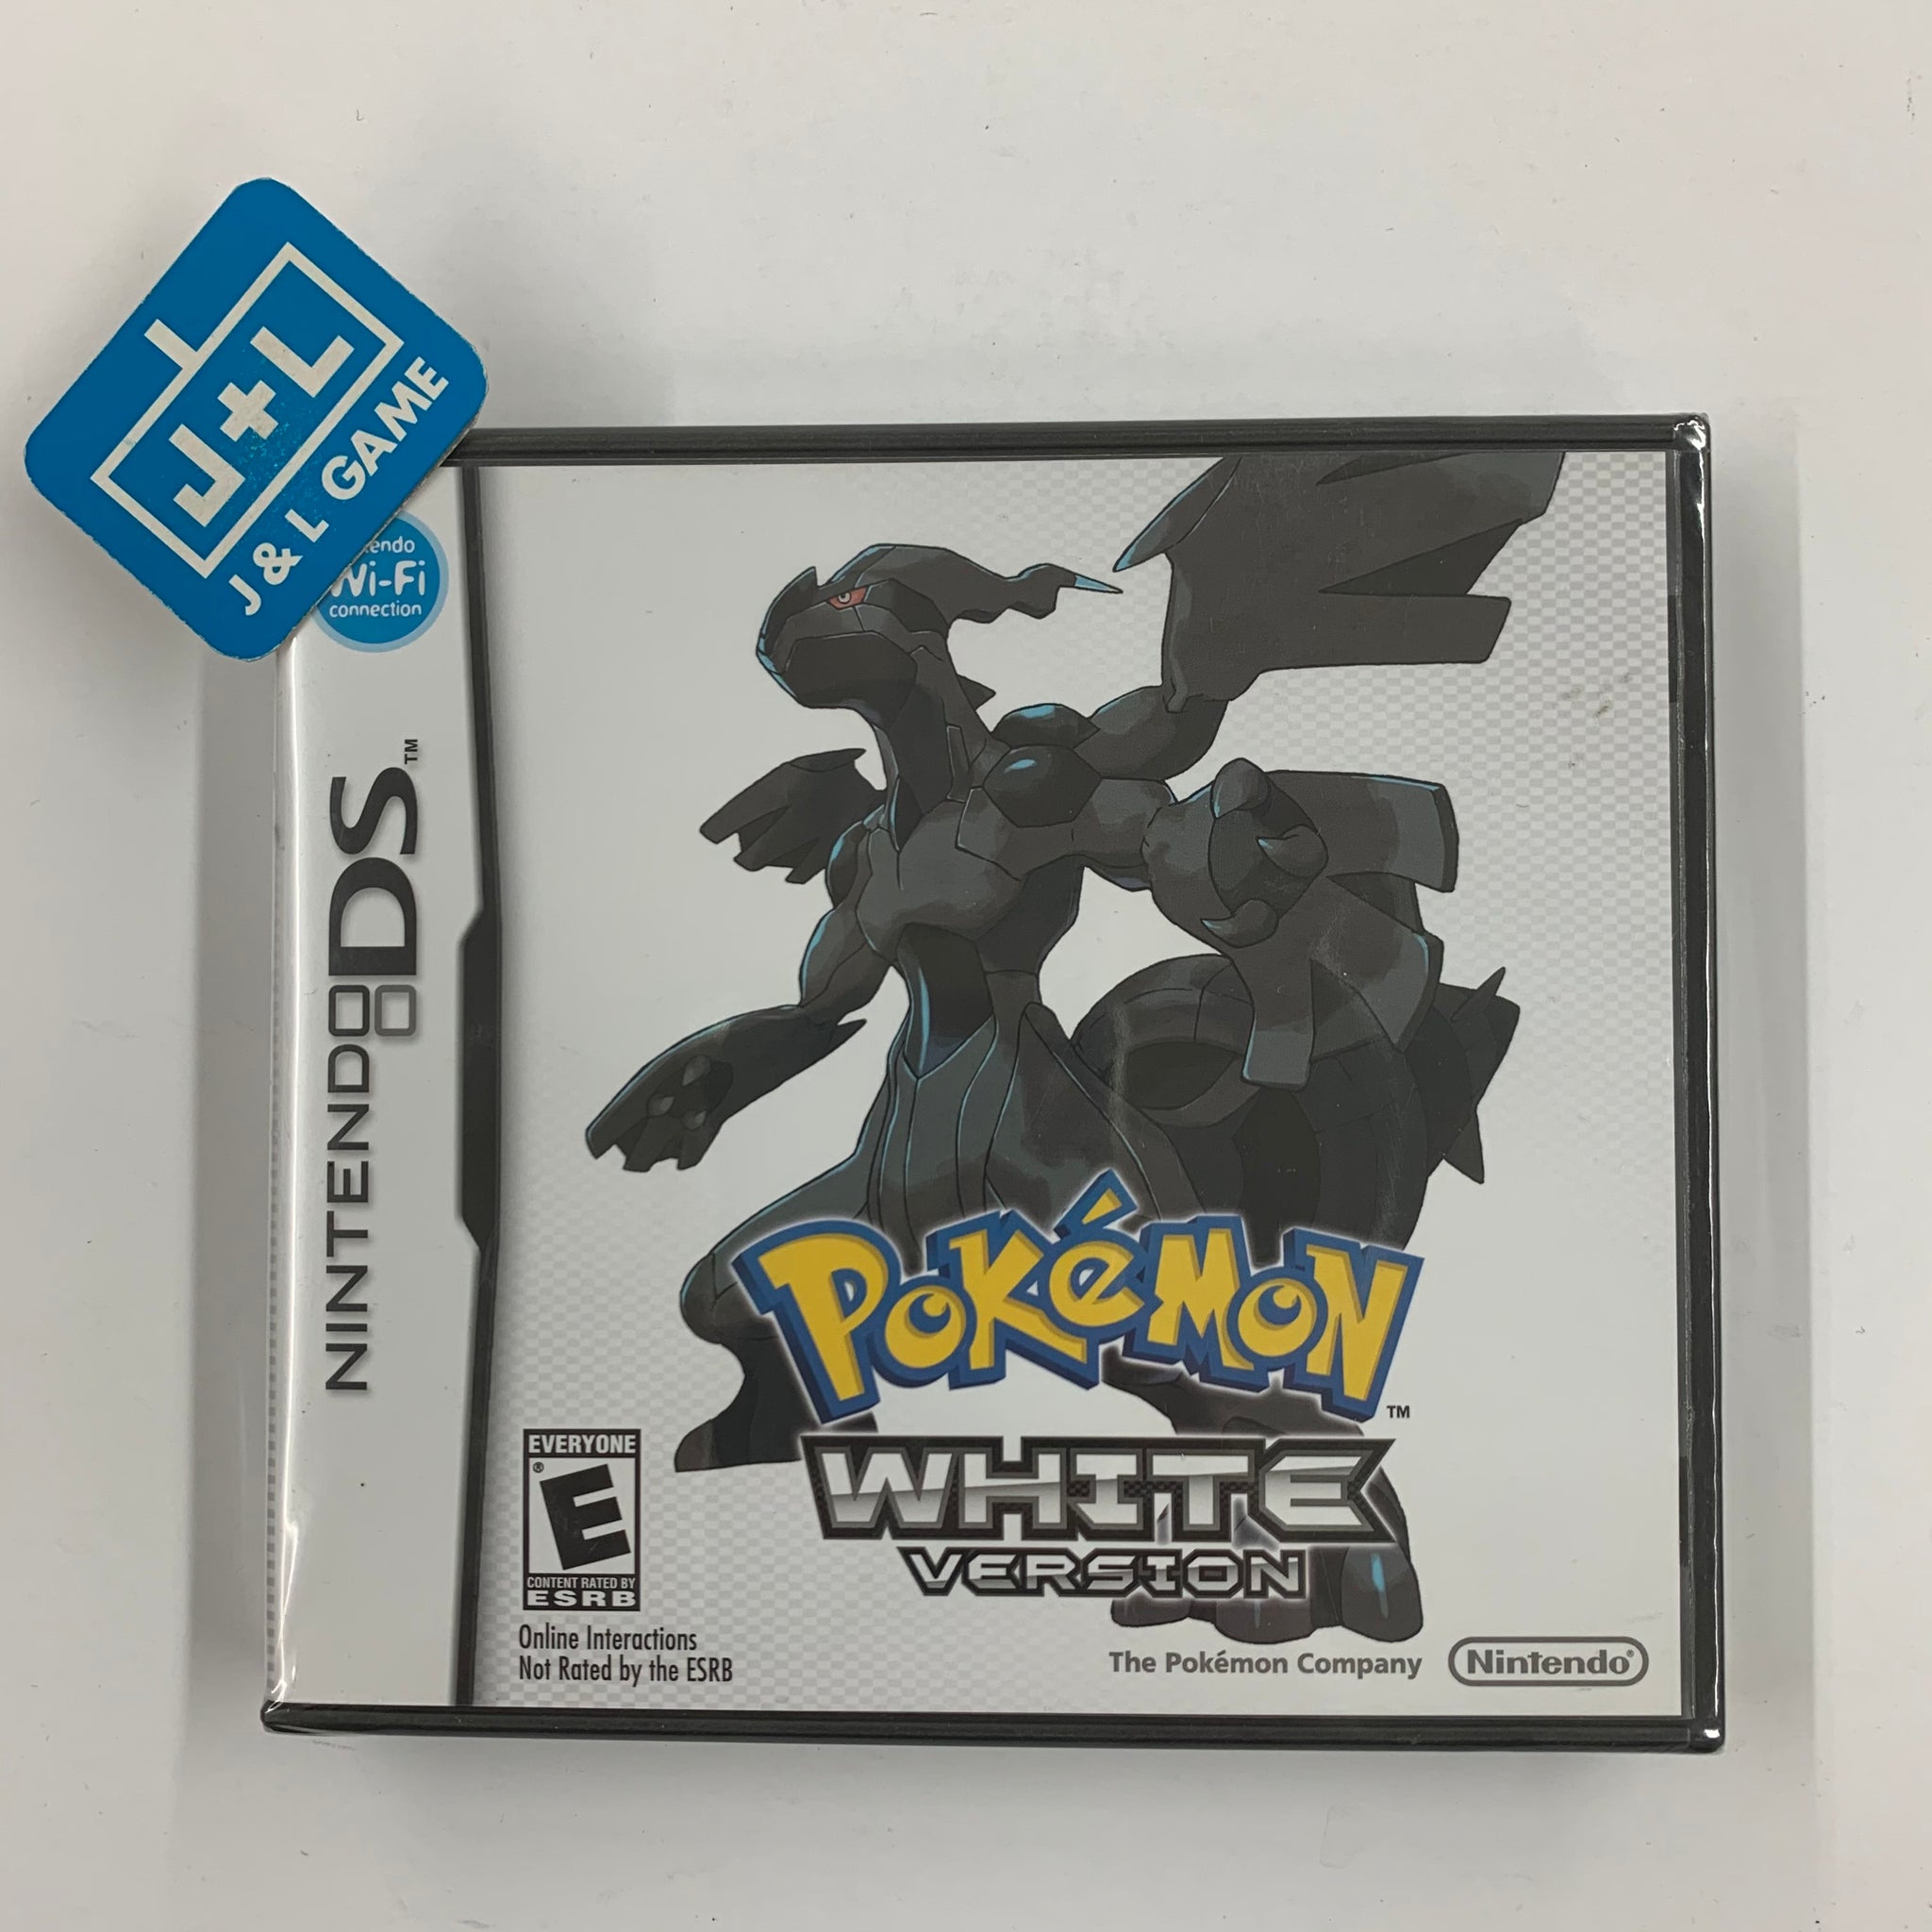 Pokémon Black Version, Nintendo DS, Games